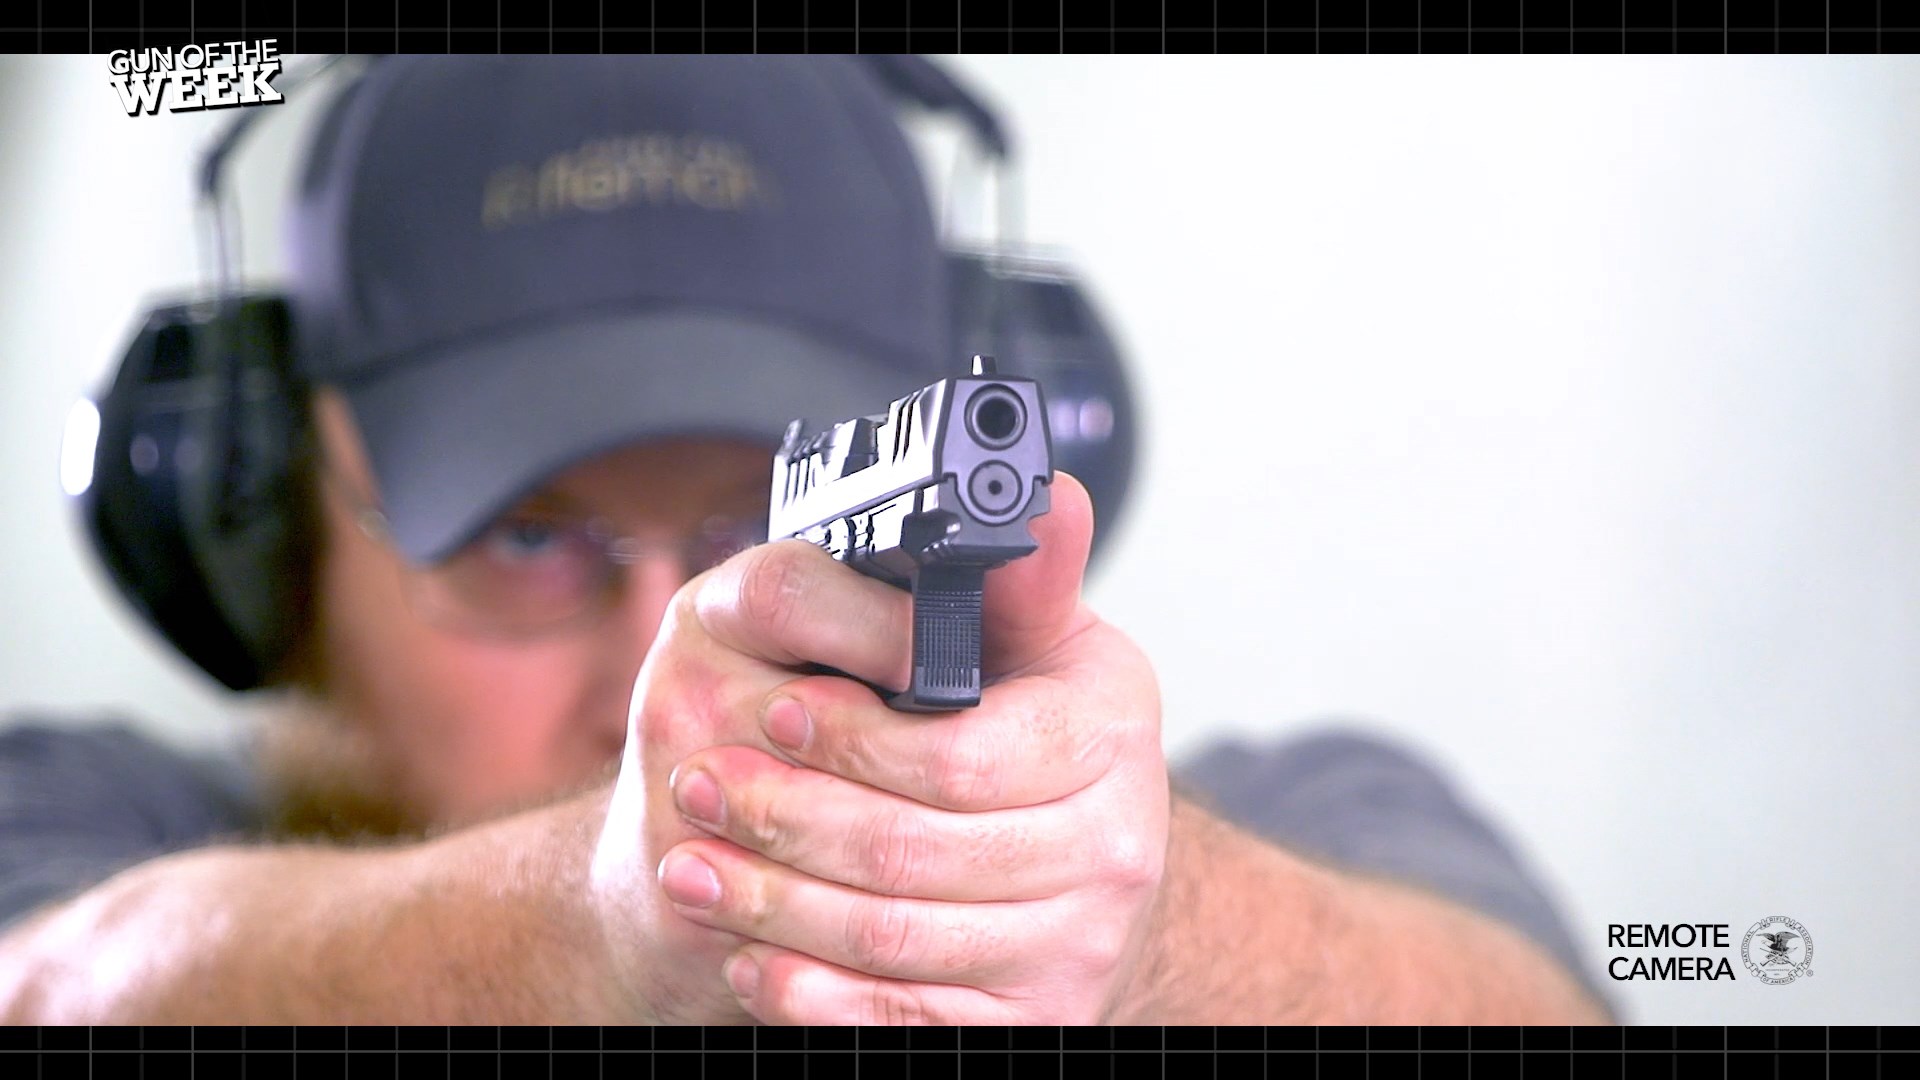 man shooting indoors white range wearing ear muffs hat shoot gun pistol walther arms pdp f-series for gun of the week video remote camera